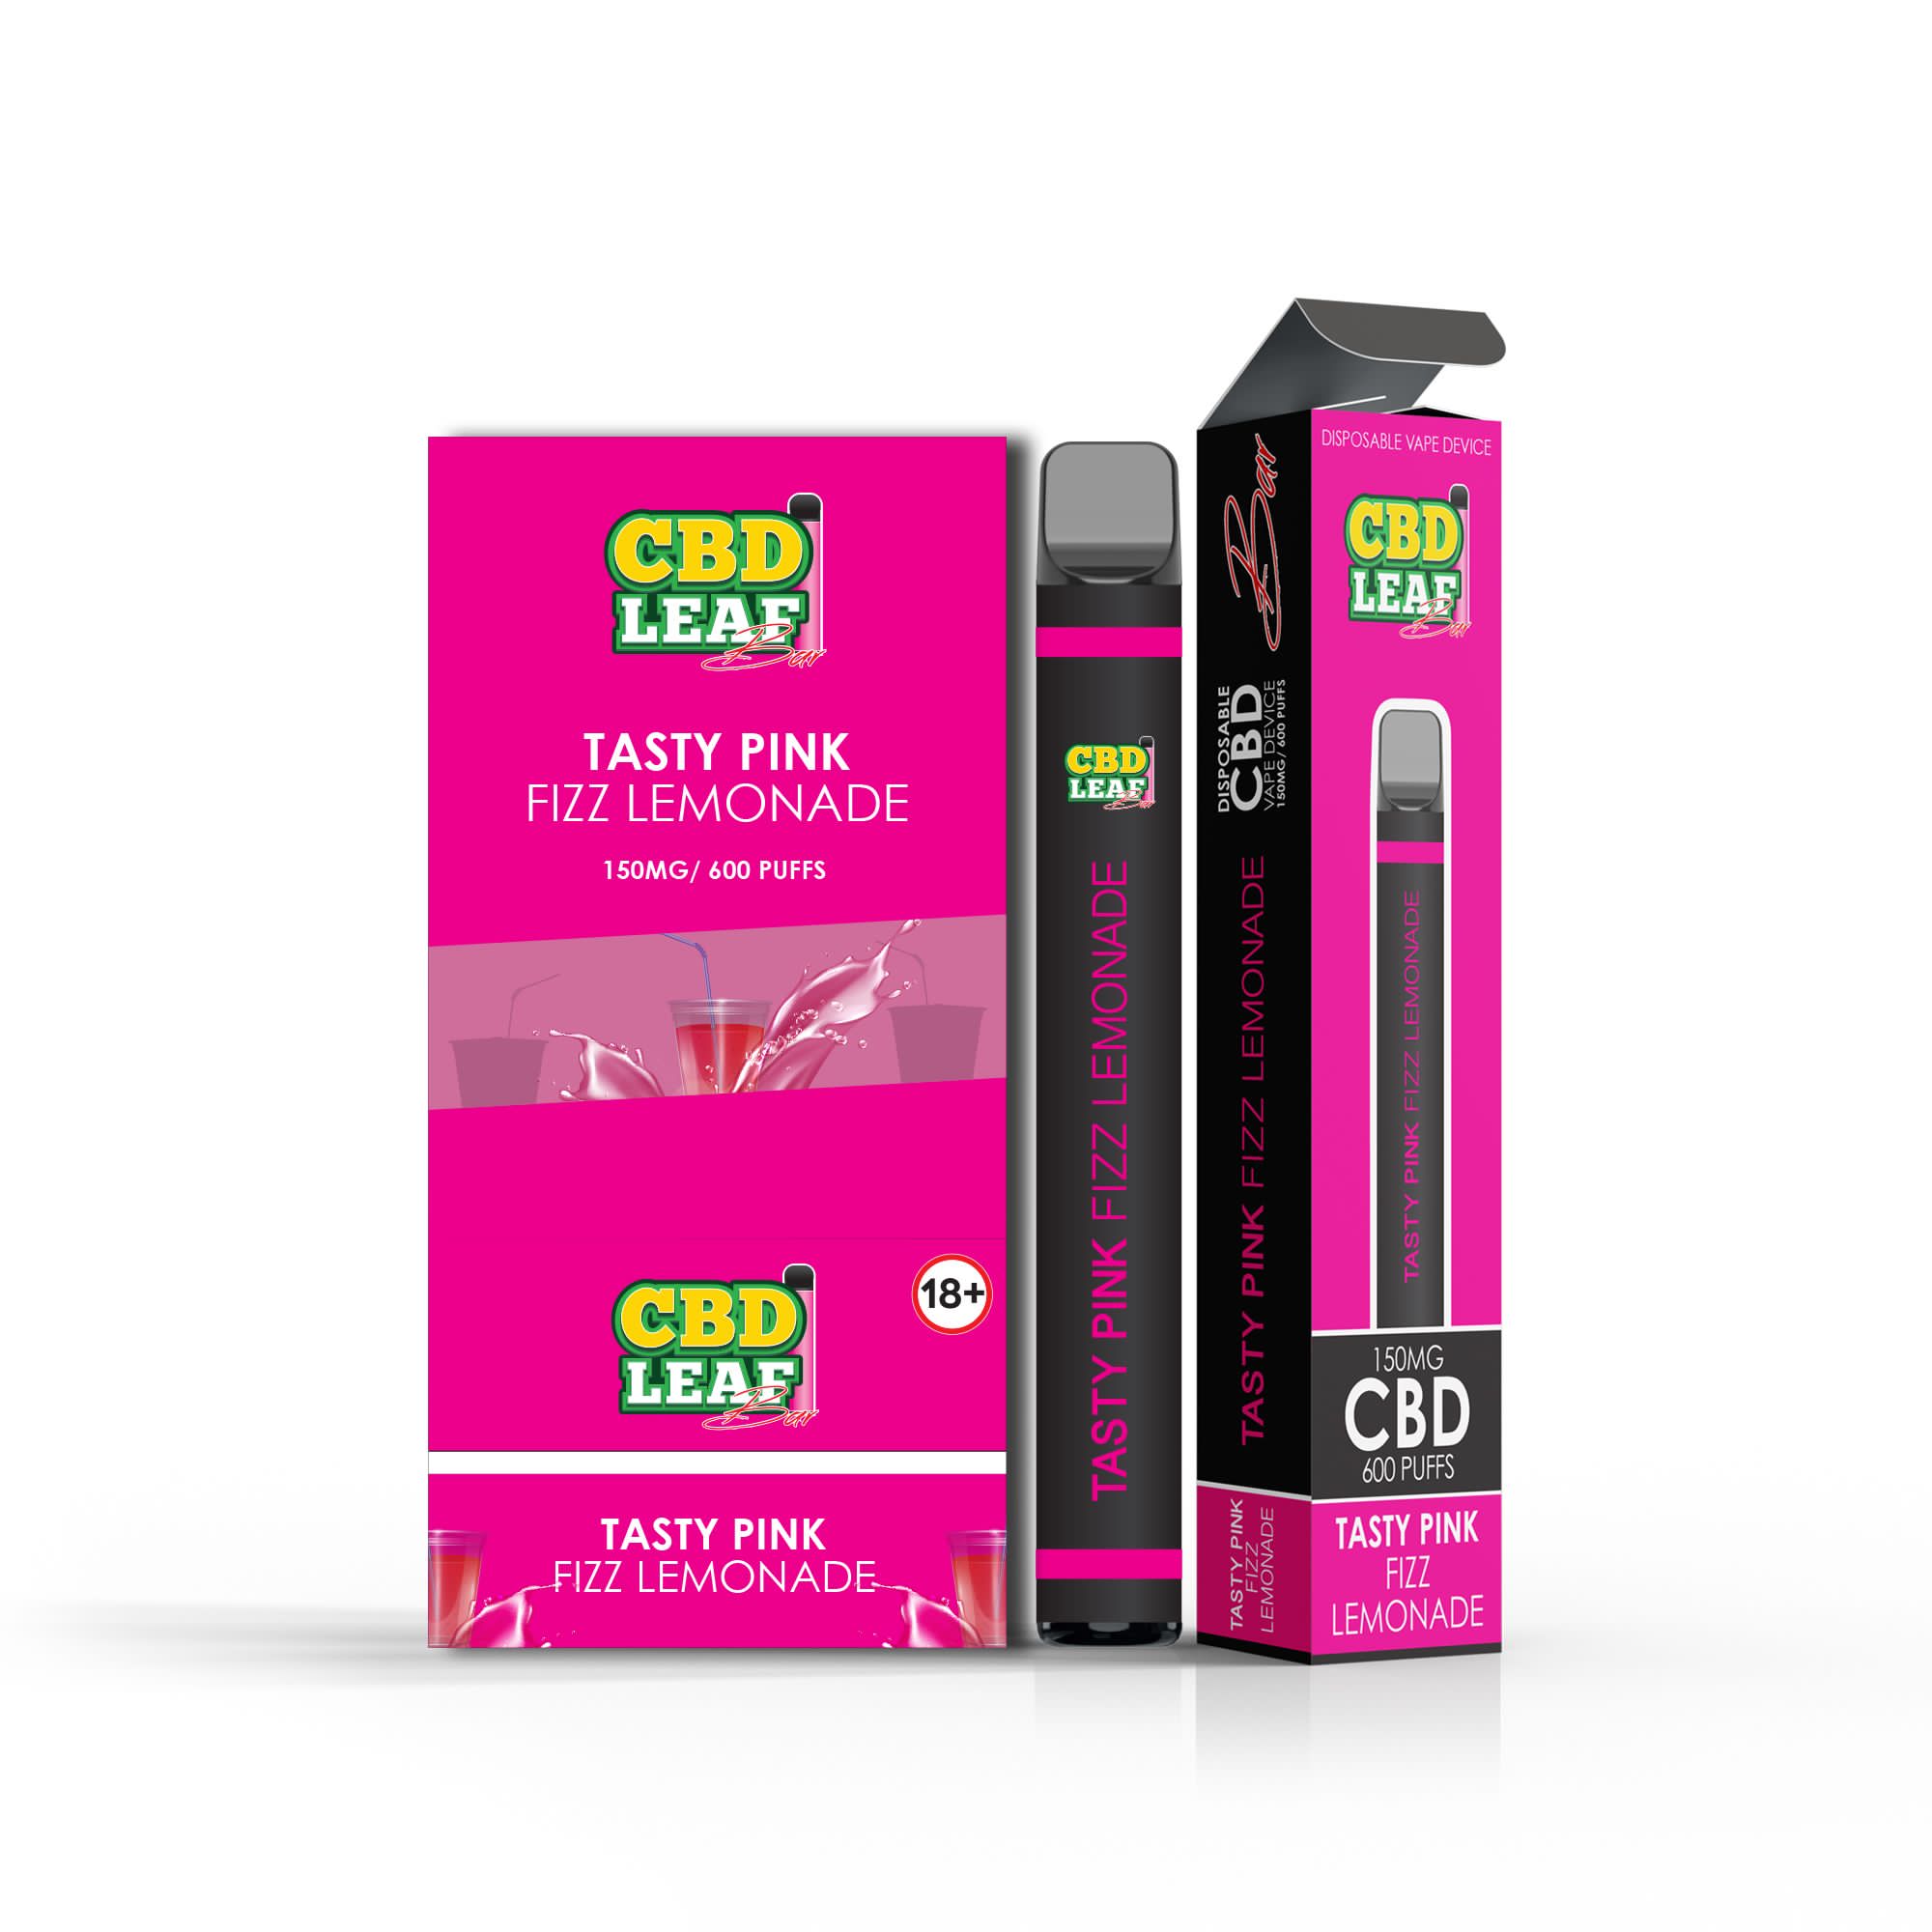 Tasty Pink Fizz Lemonade by CBD LEAF 600 Puff